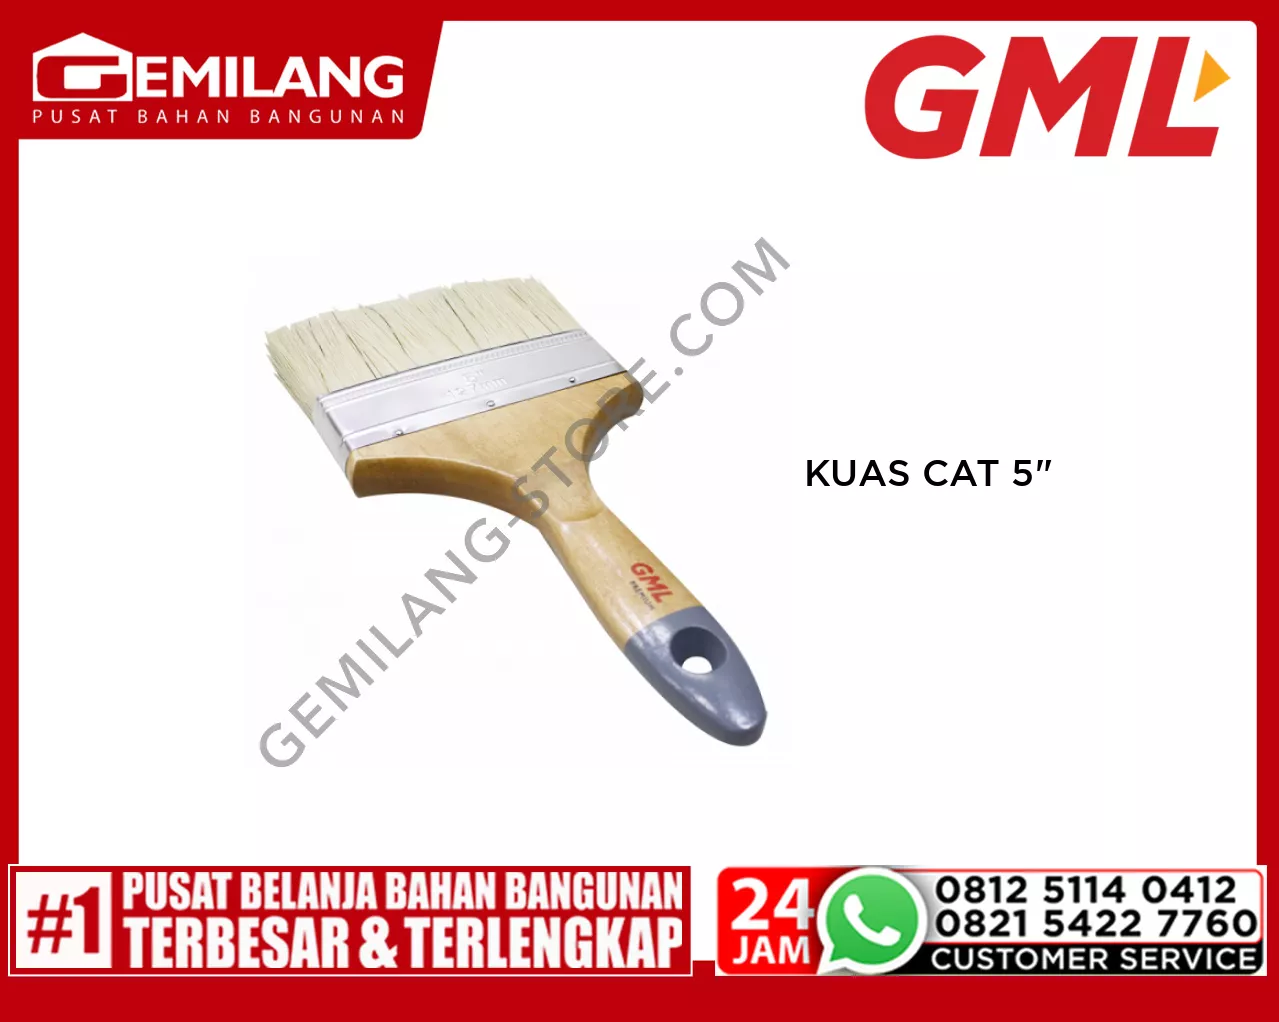 GML KUAS CAT PREMIUM 5inch GEMPB027